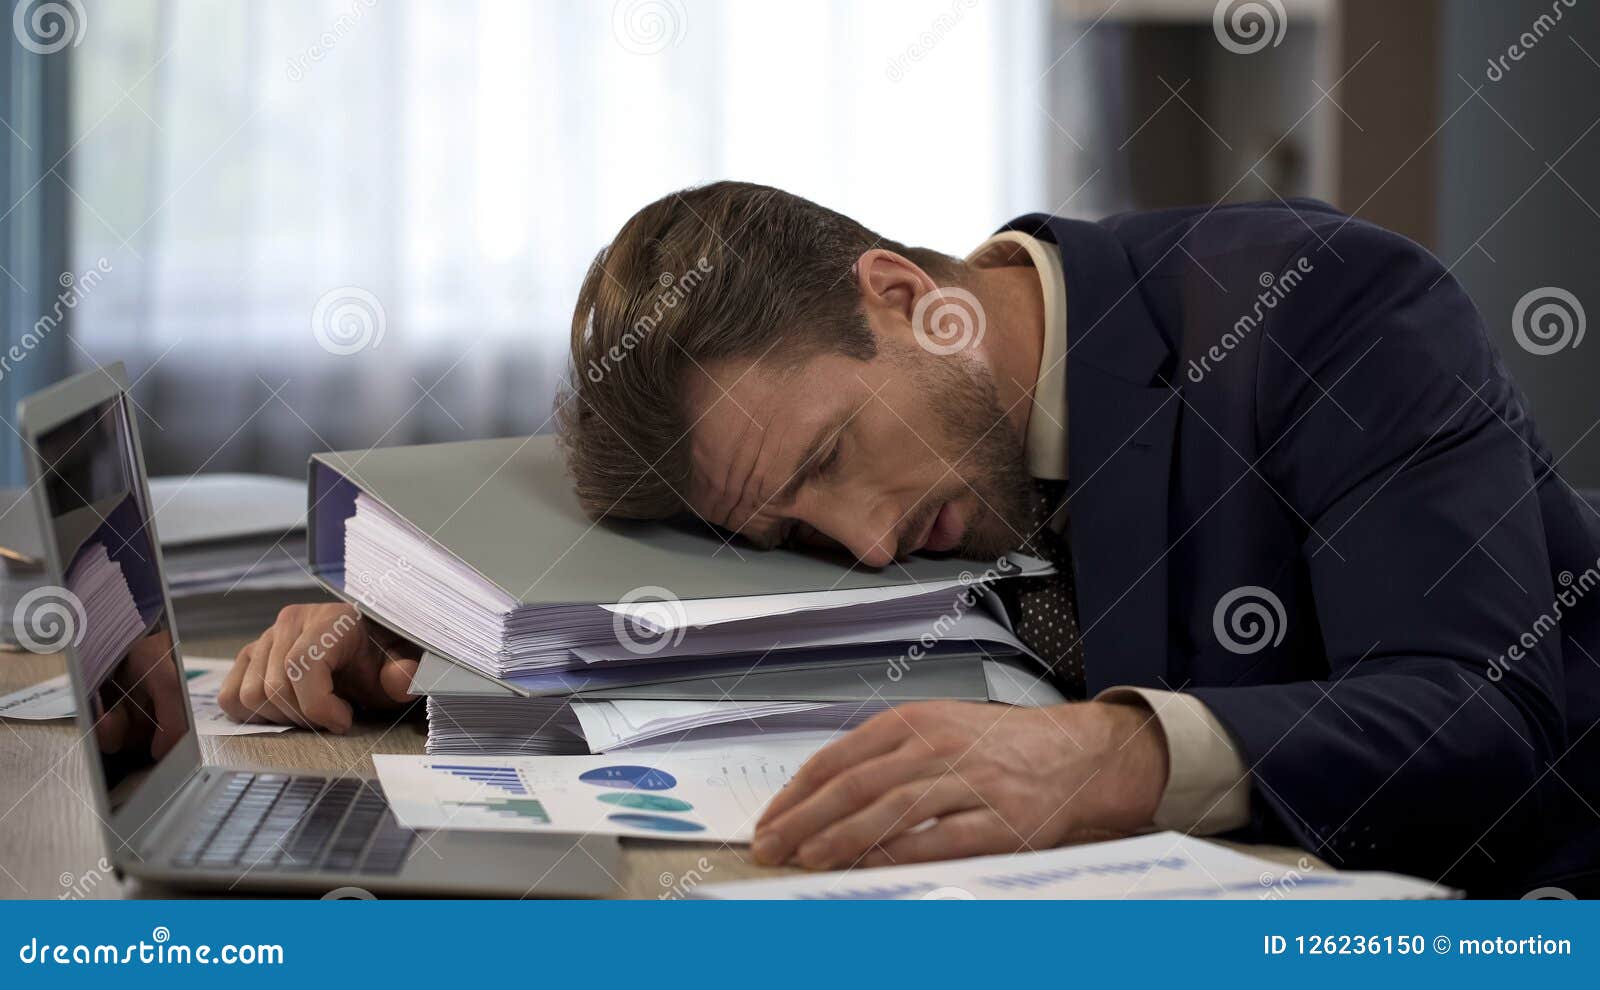 depressed businessman lying on pile of folders, deadline pressure, exhaustion